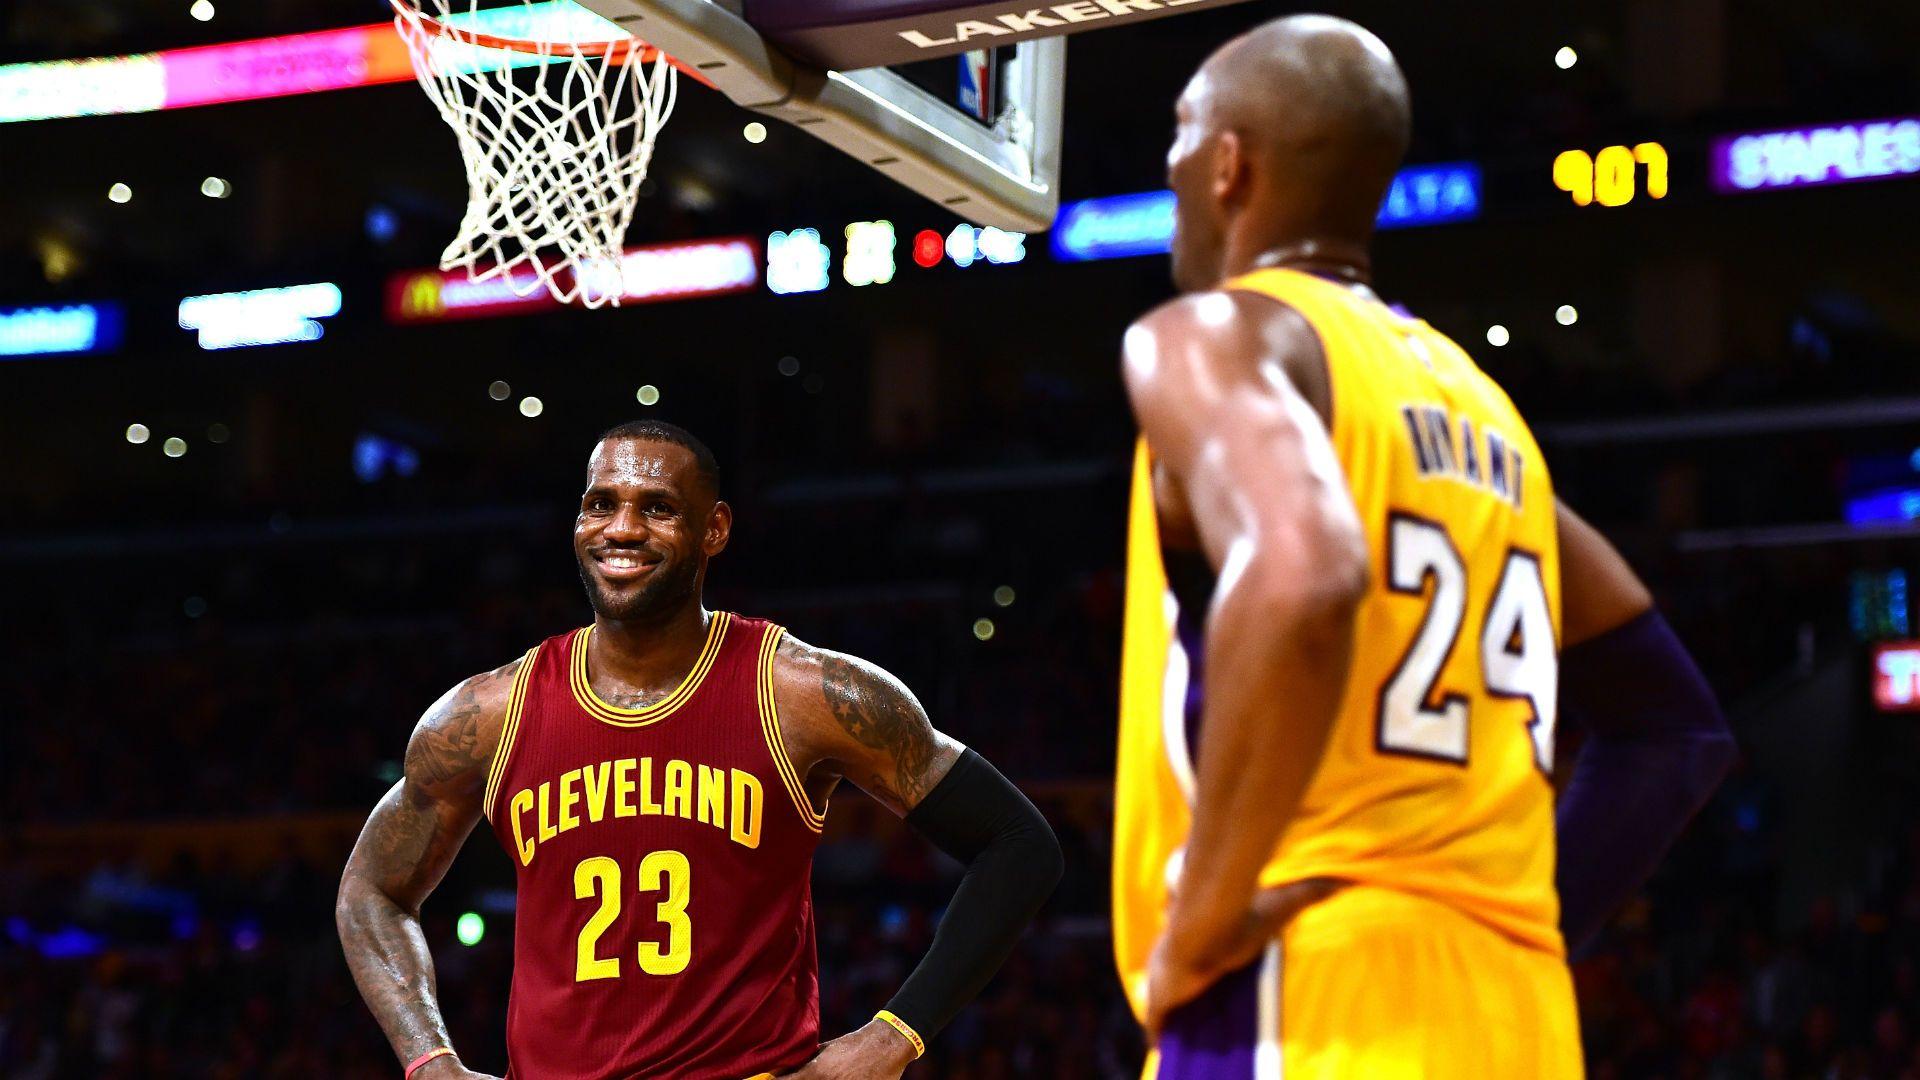 Kobe Bryant, NBA players react to LeBron James joining Lakers. NBA